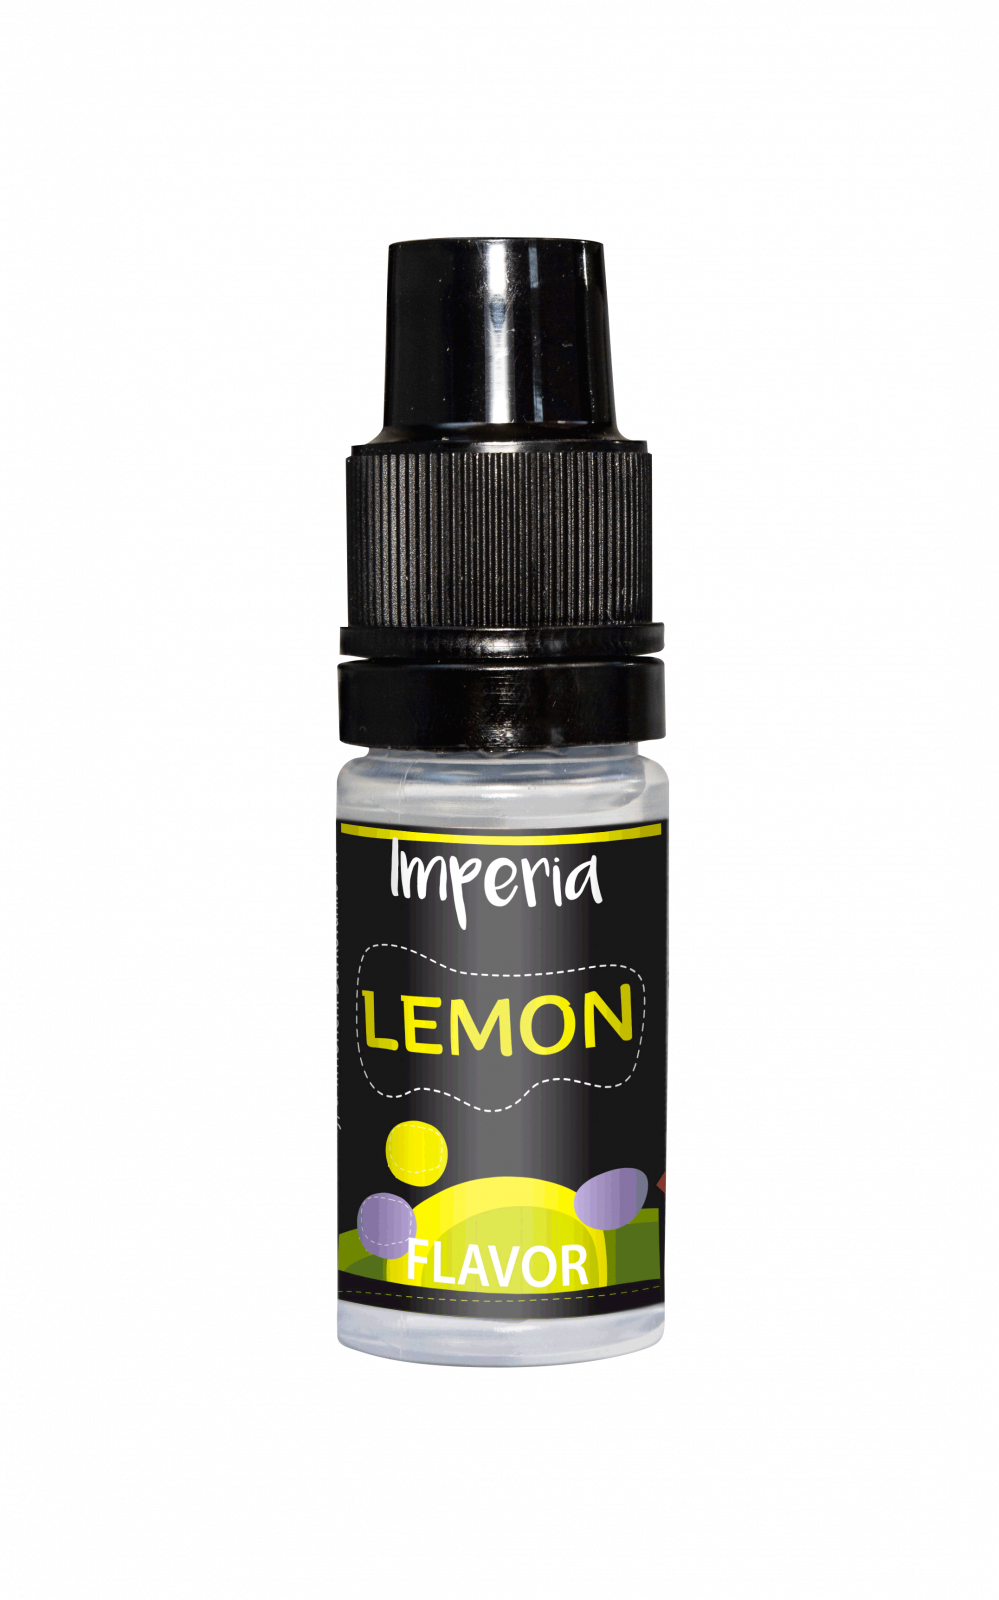 CITRÓN / Lemon - Aróma Imperia Black Label 10 ml Boudoir Samadhi s.r.o.